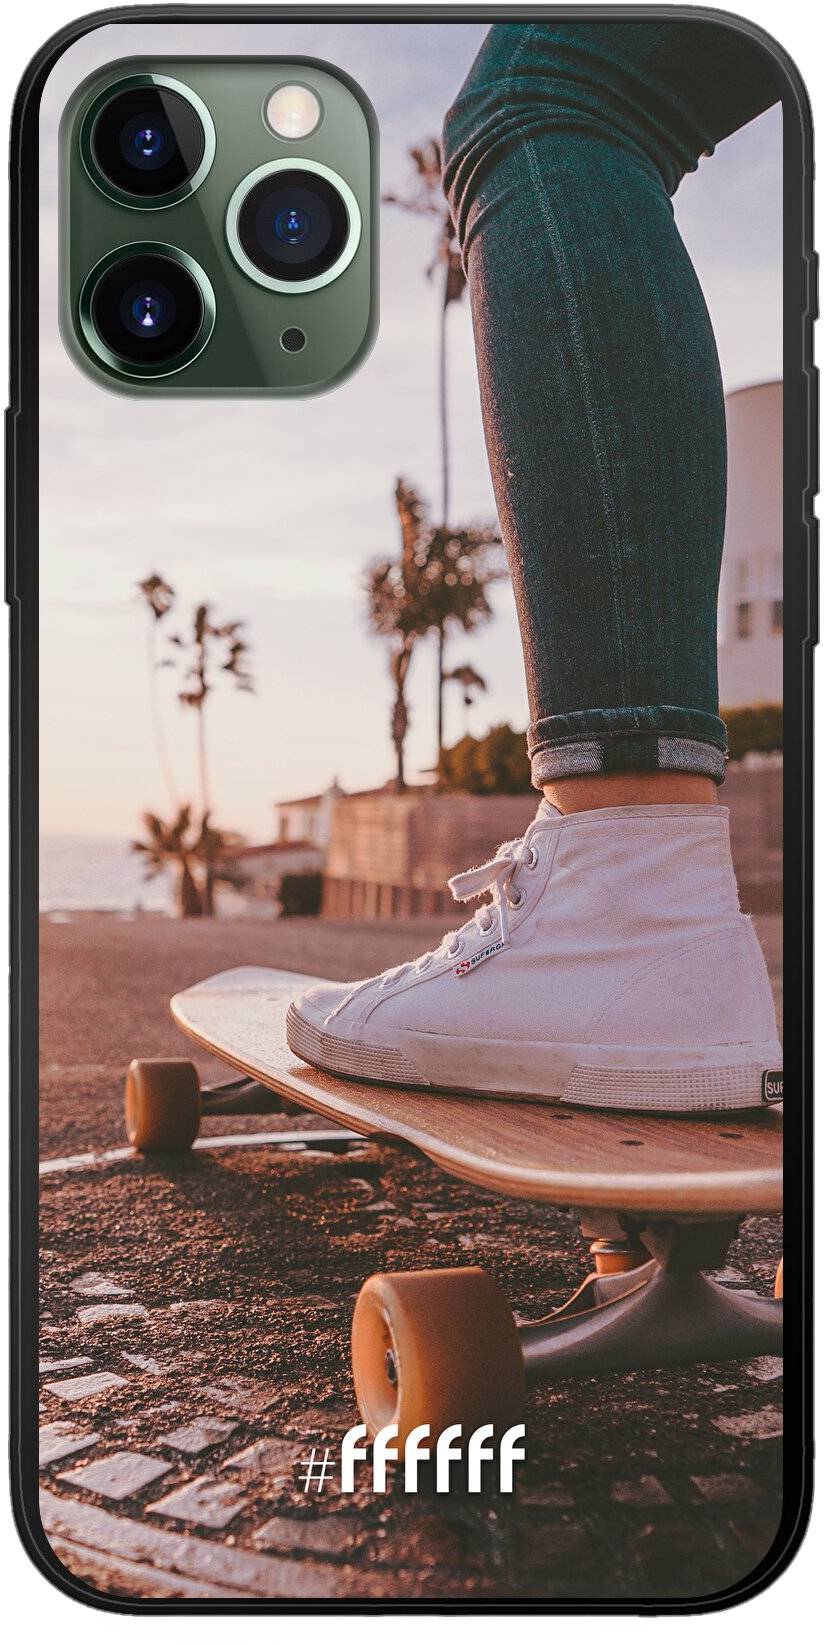 Skateboarding iPhone 11 Pro